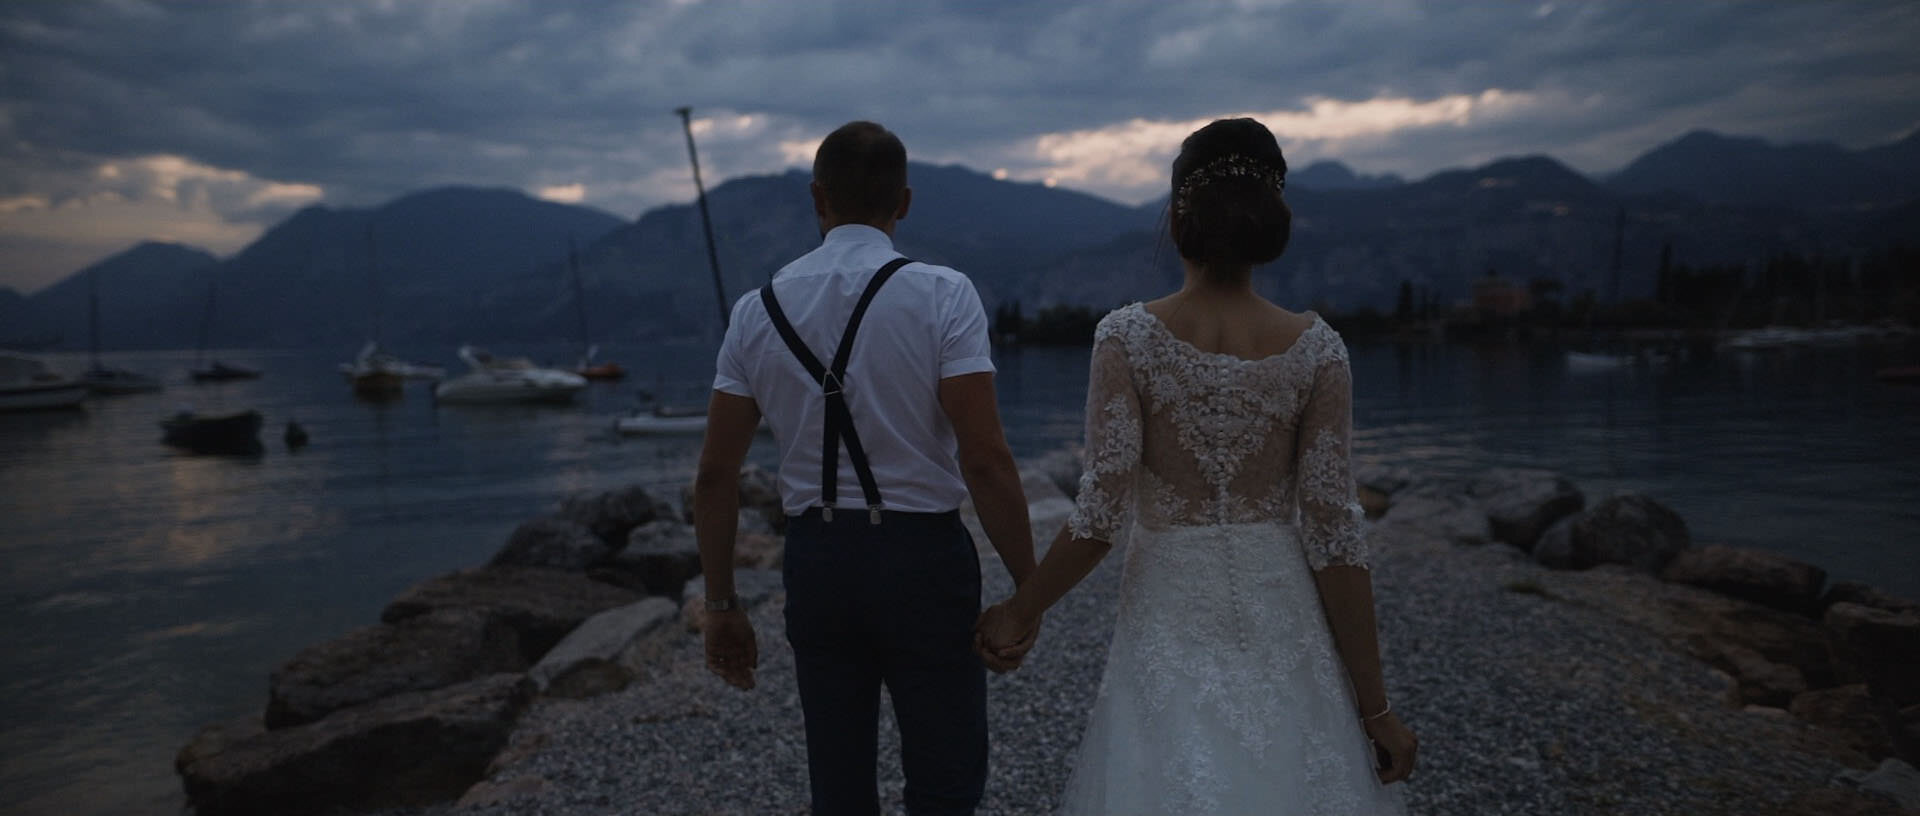 Lisa & Josh's Perfect Malcesine Wedding at Lake Garda 40.jpg